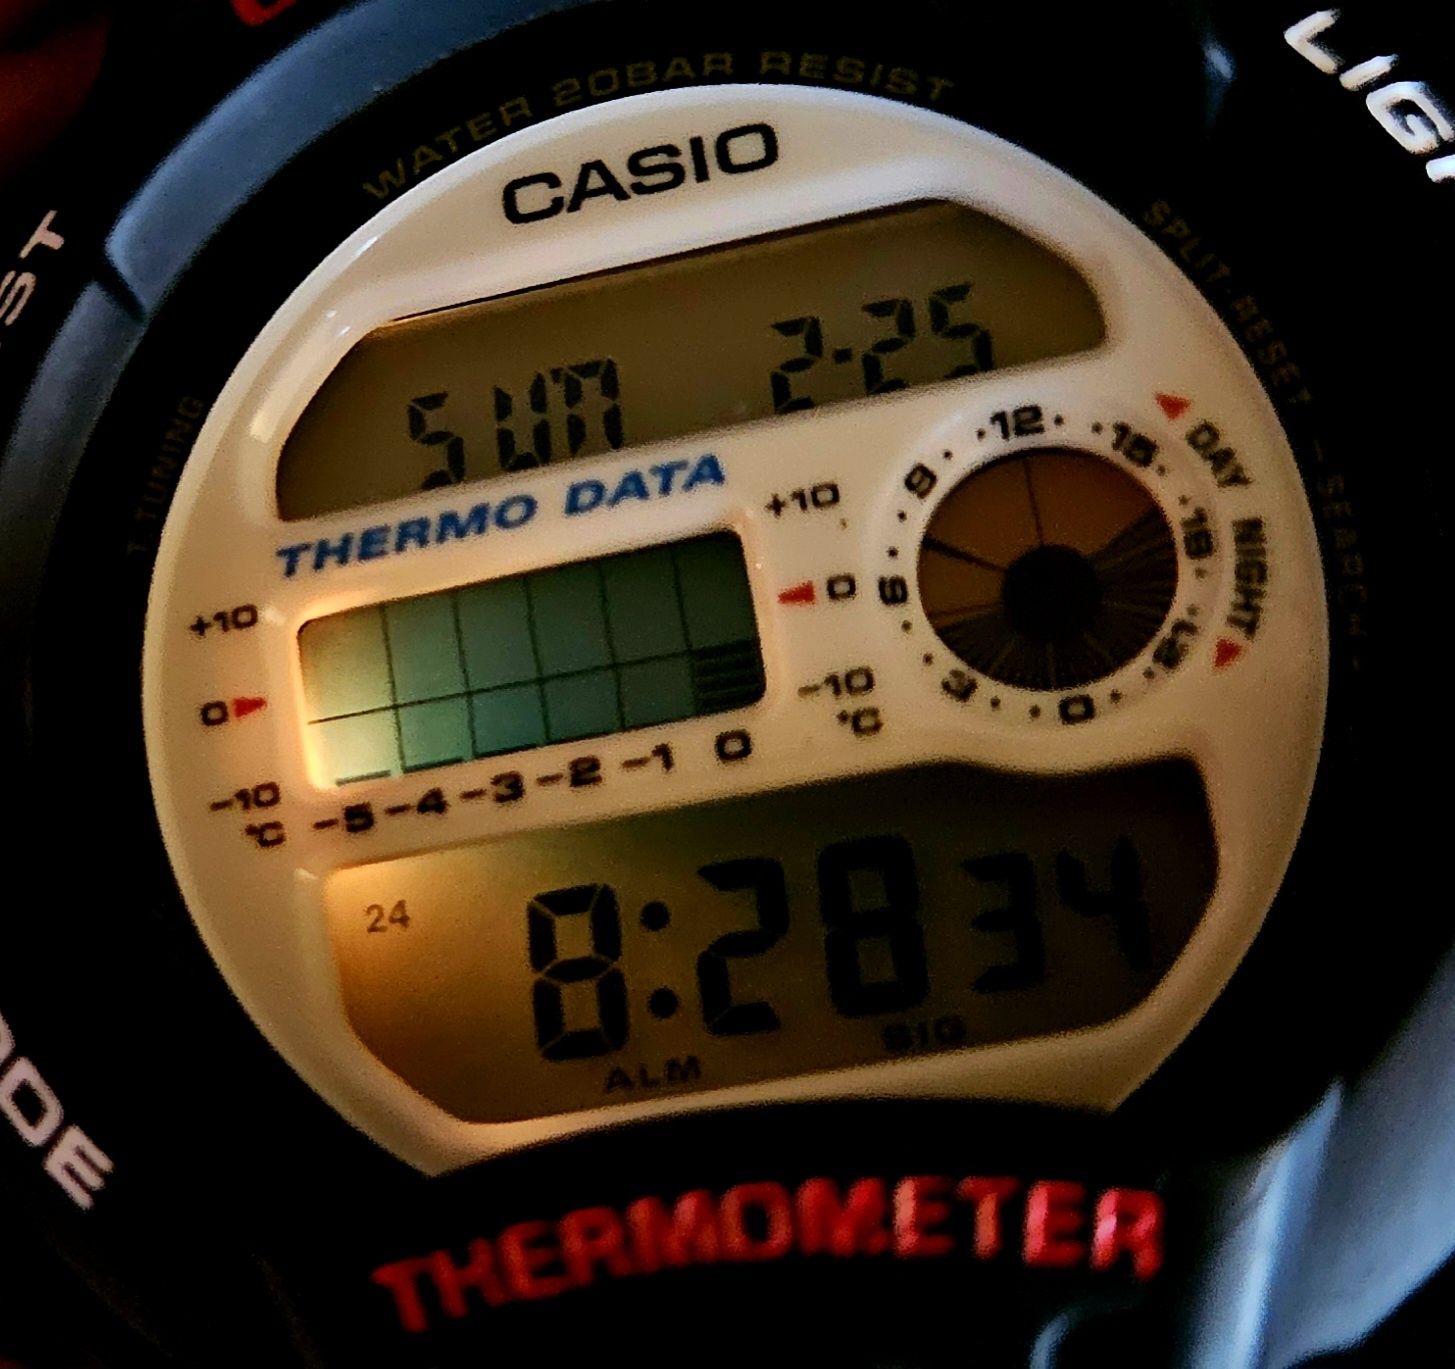 DW-6100 Thermometer vintage-G Casio G-shock 1993